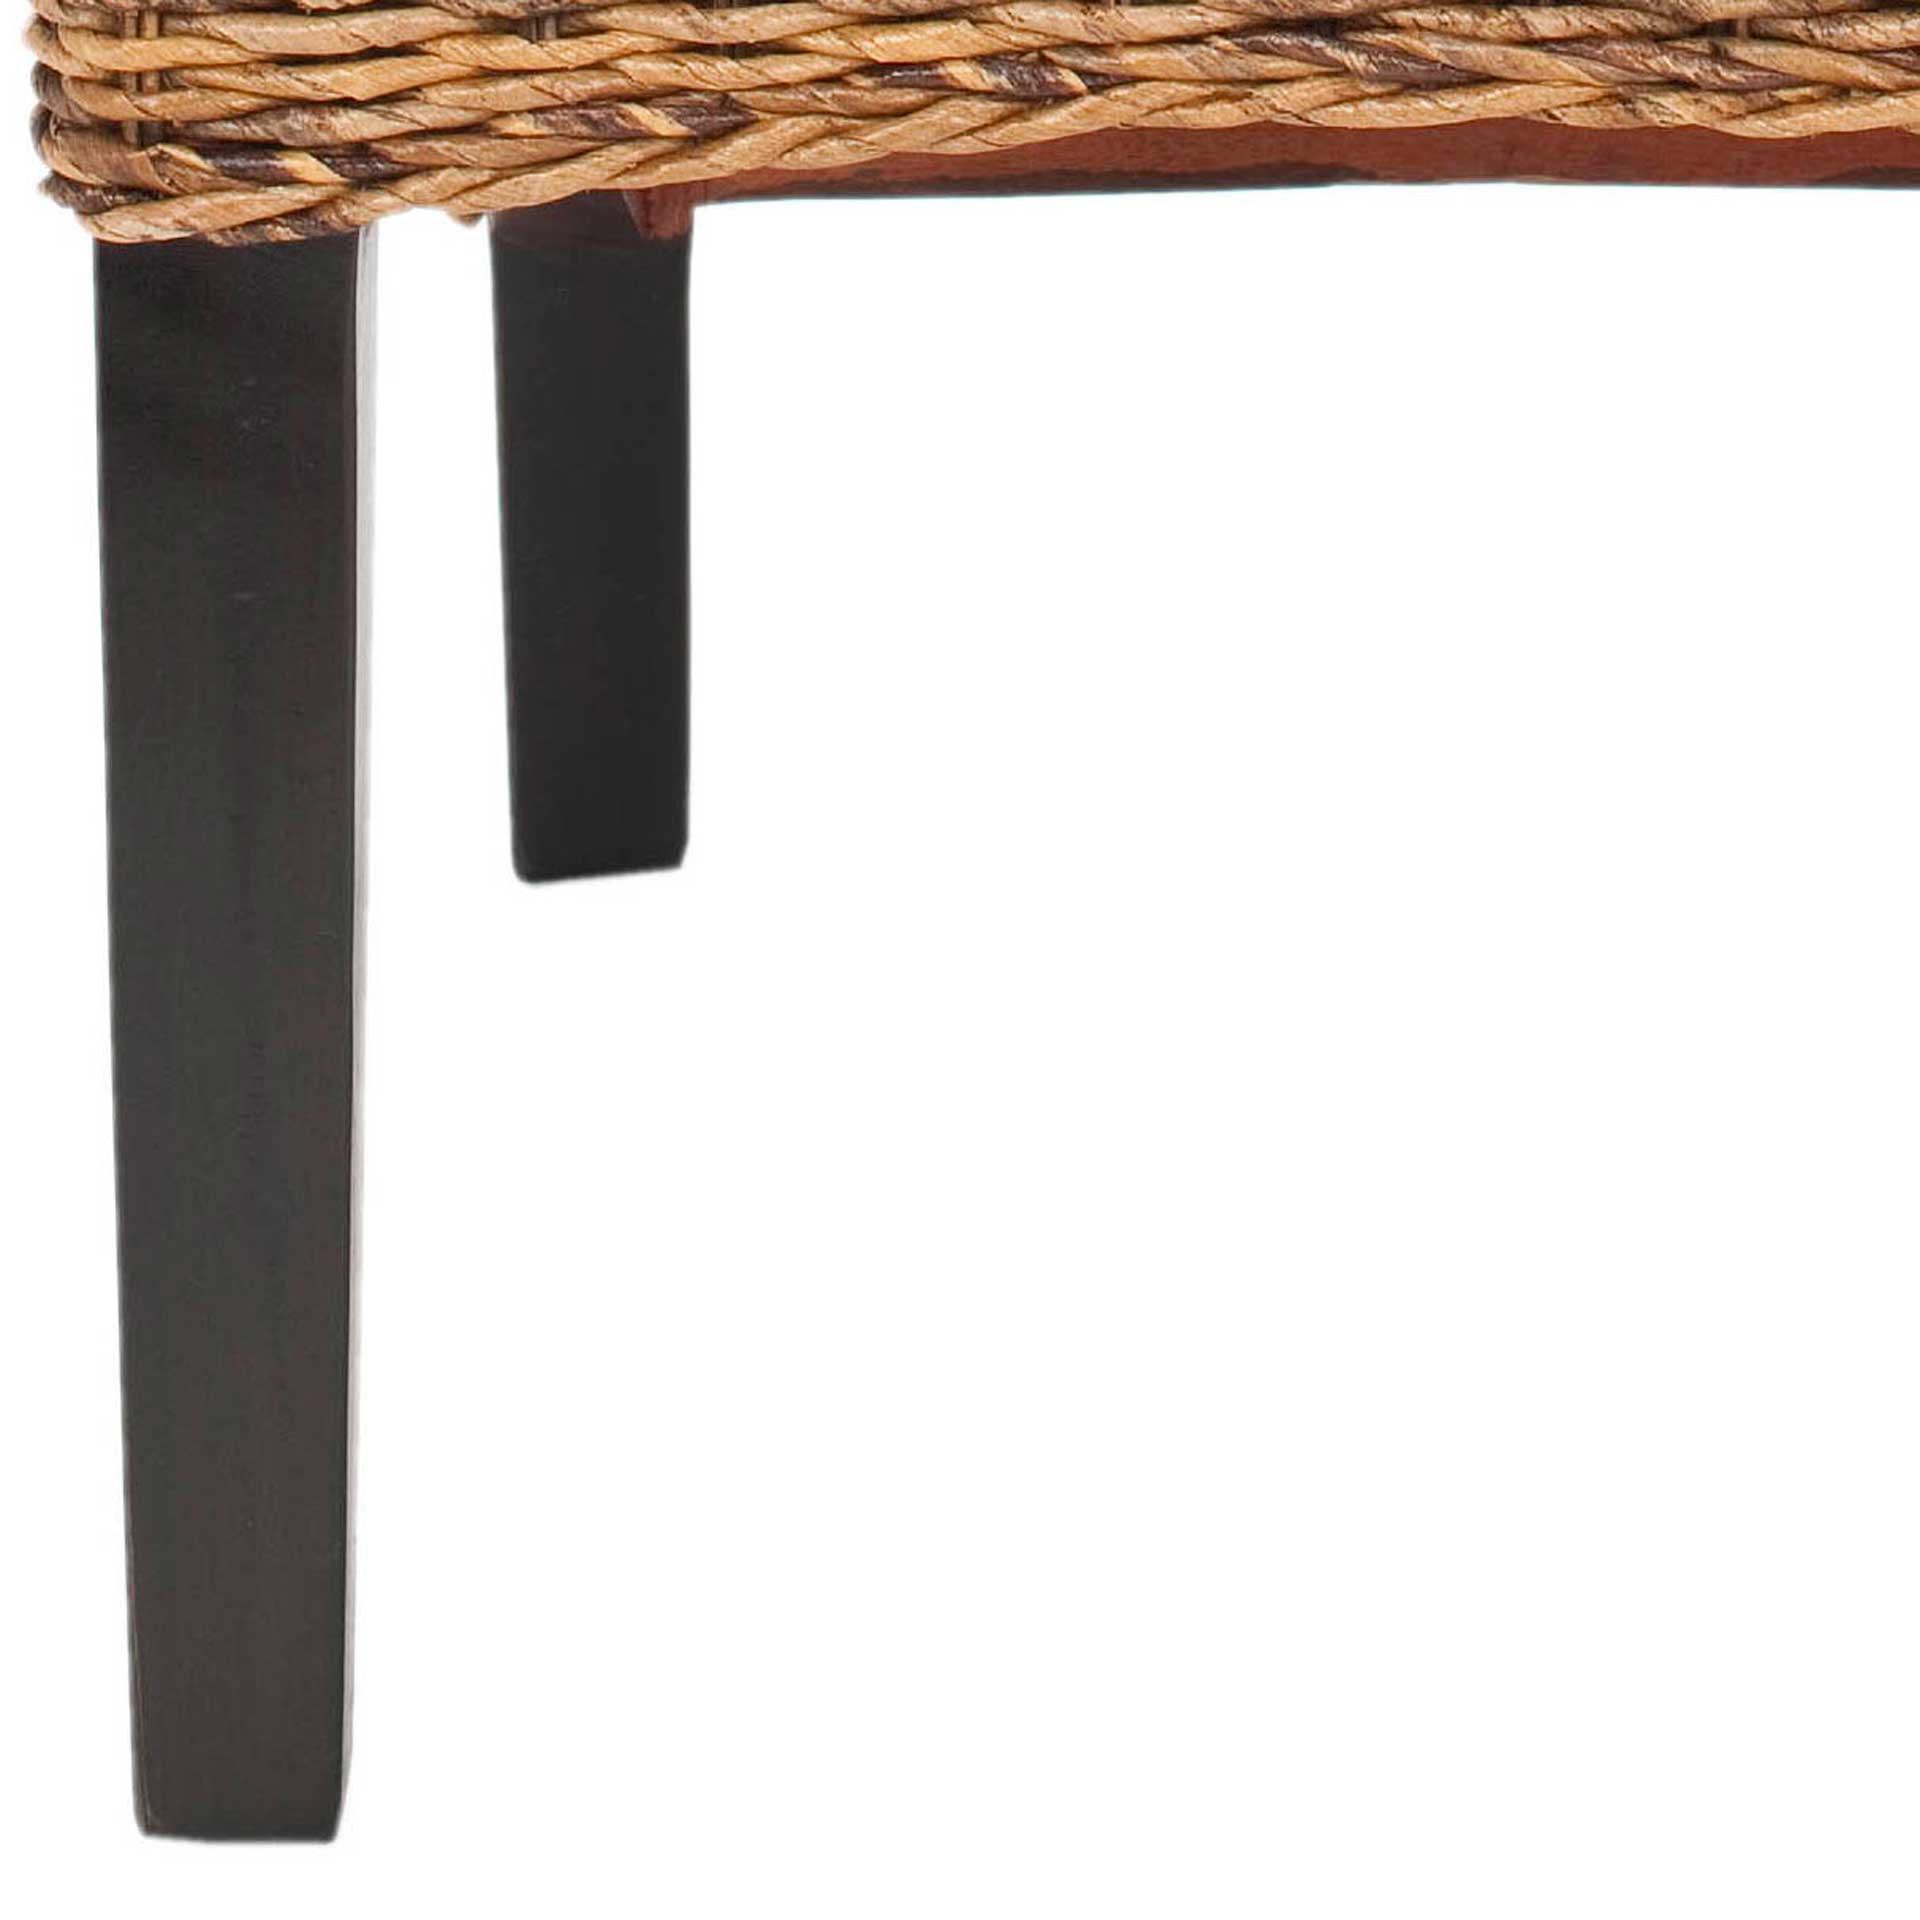 Simple Wicker Side Chair Brown/Colonial (Set of 2)